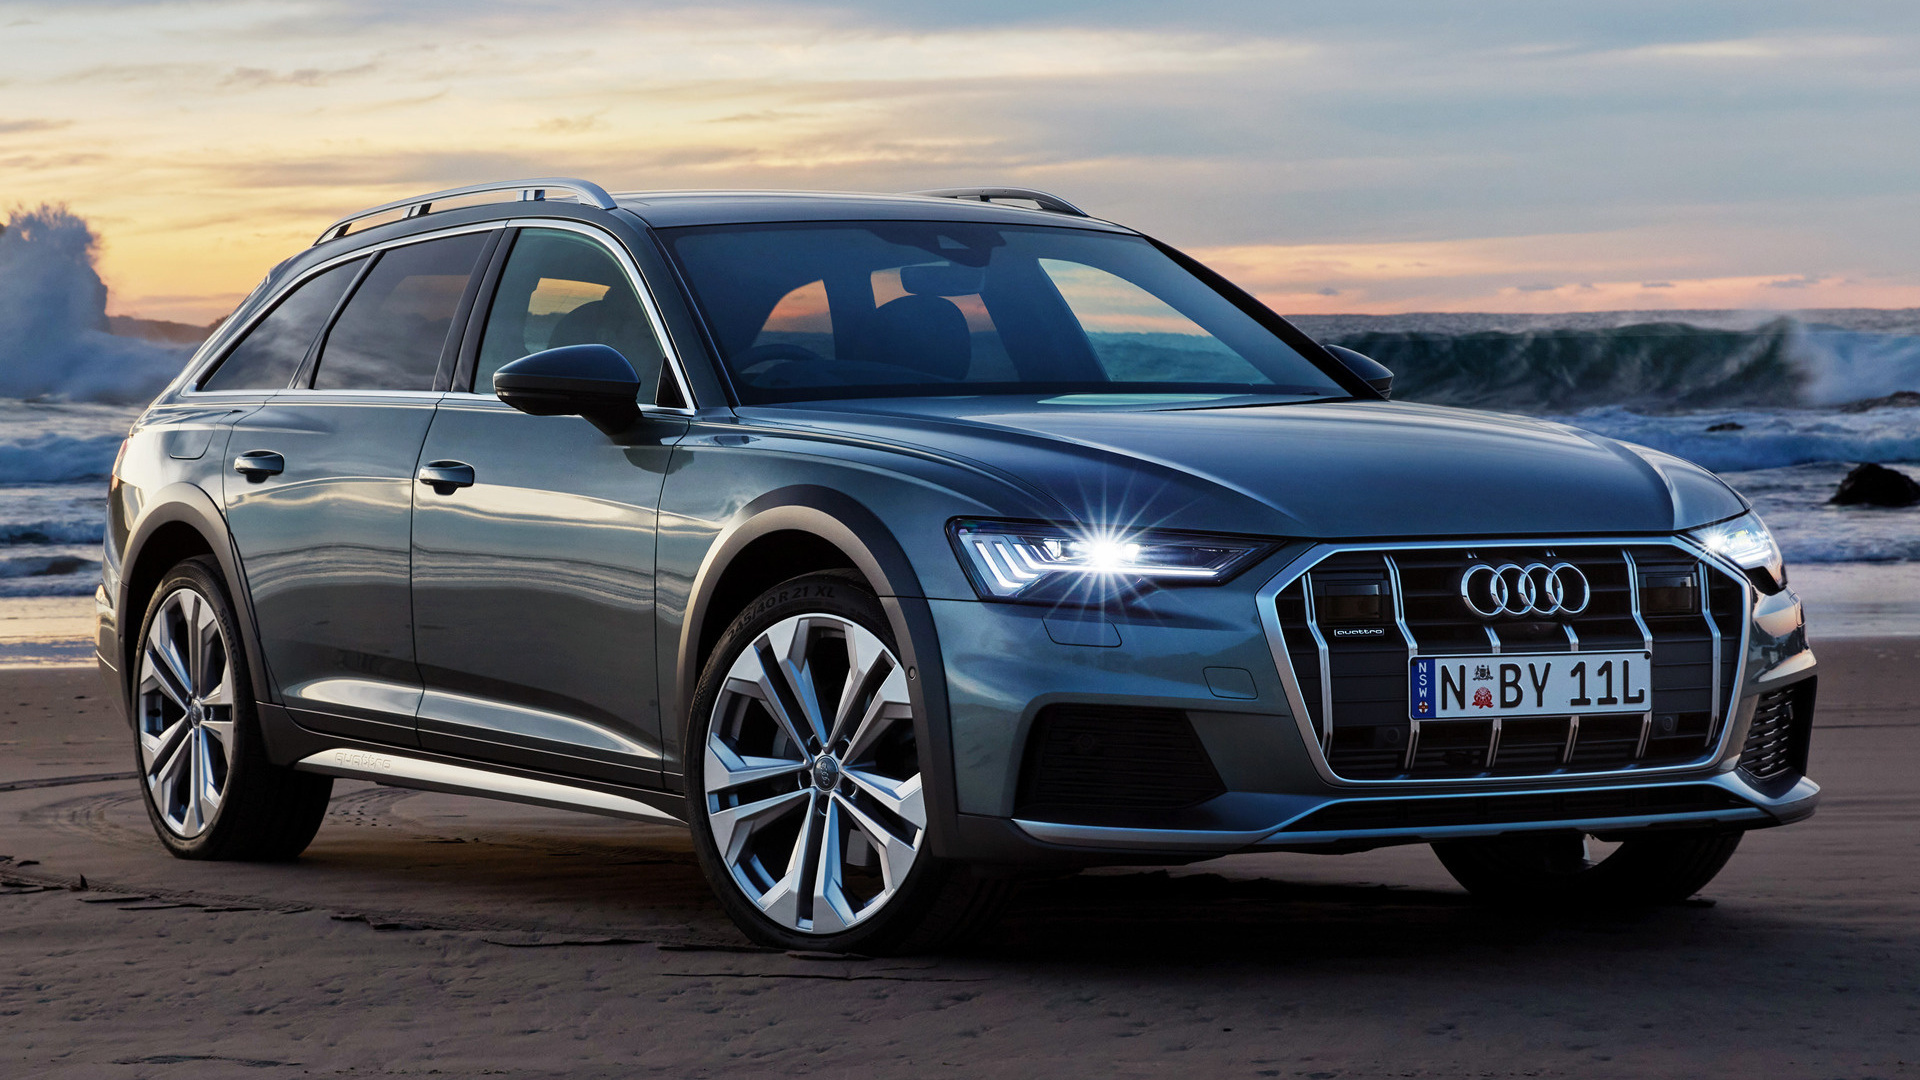 Audi A6 Allroad, Premium luxury, Off-road capabilities, Cutting-edge technology, 1920x1080 Full HD Desktop